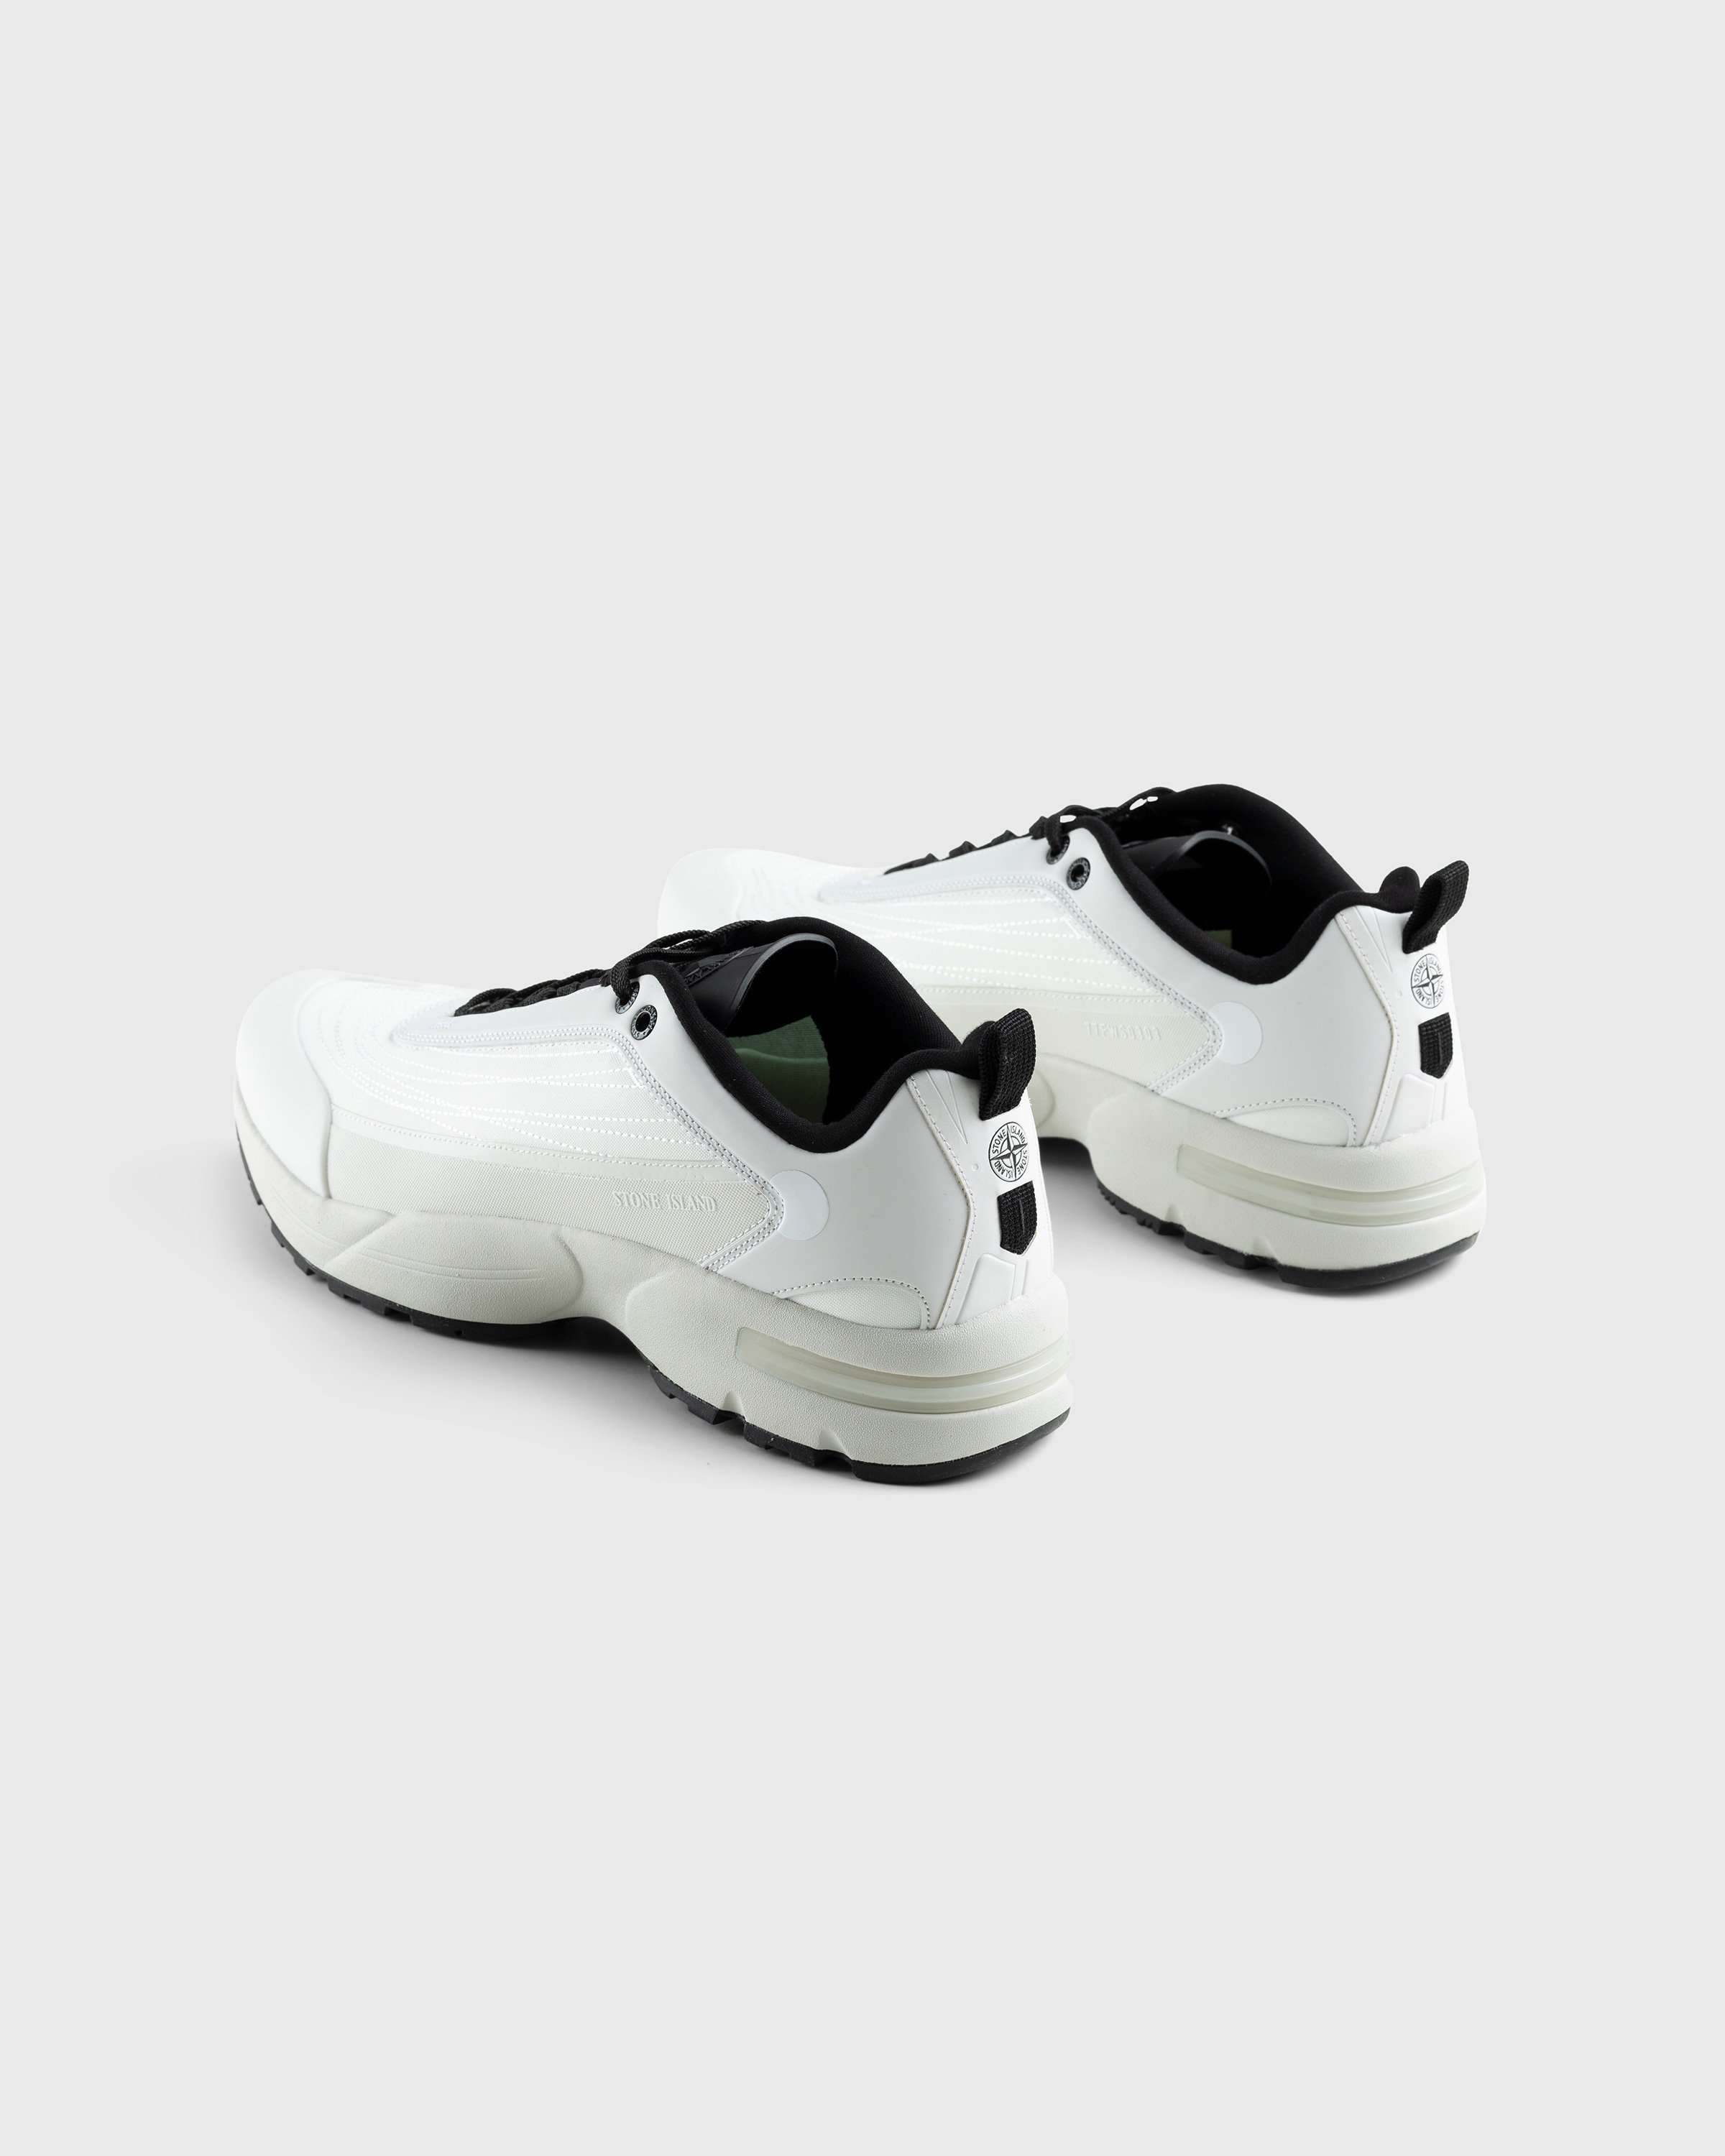 Stone Island - Grime Sneaker White - Footwear - White - Image 4